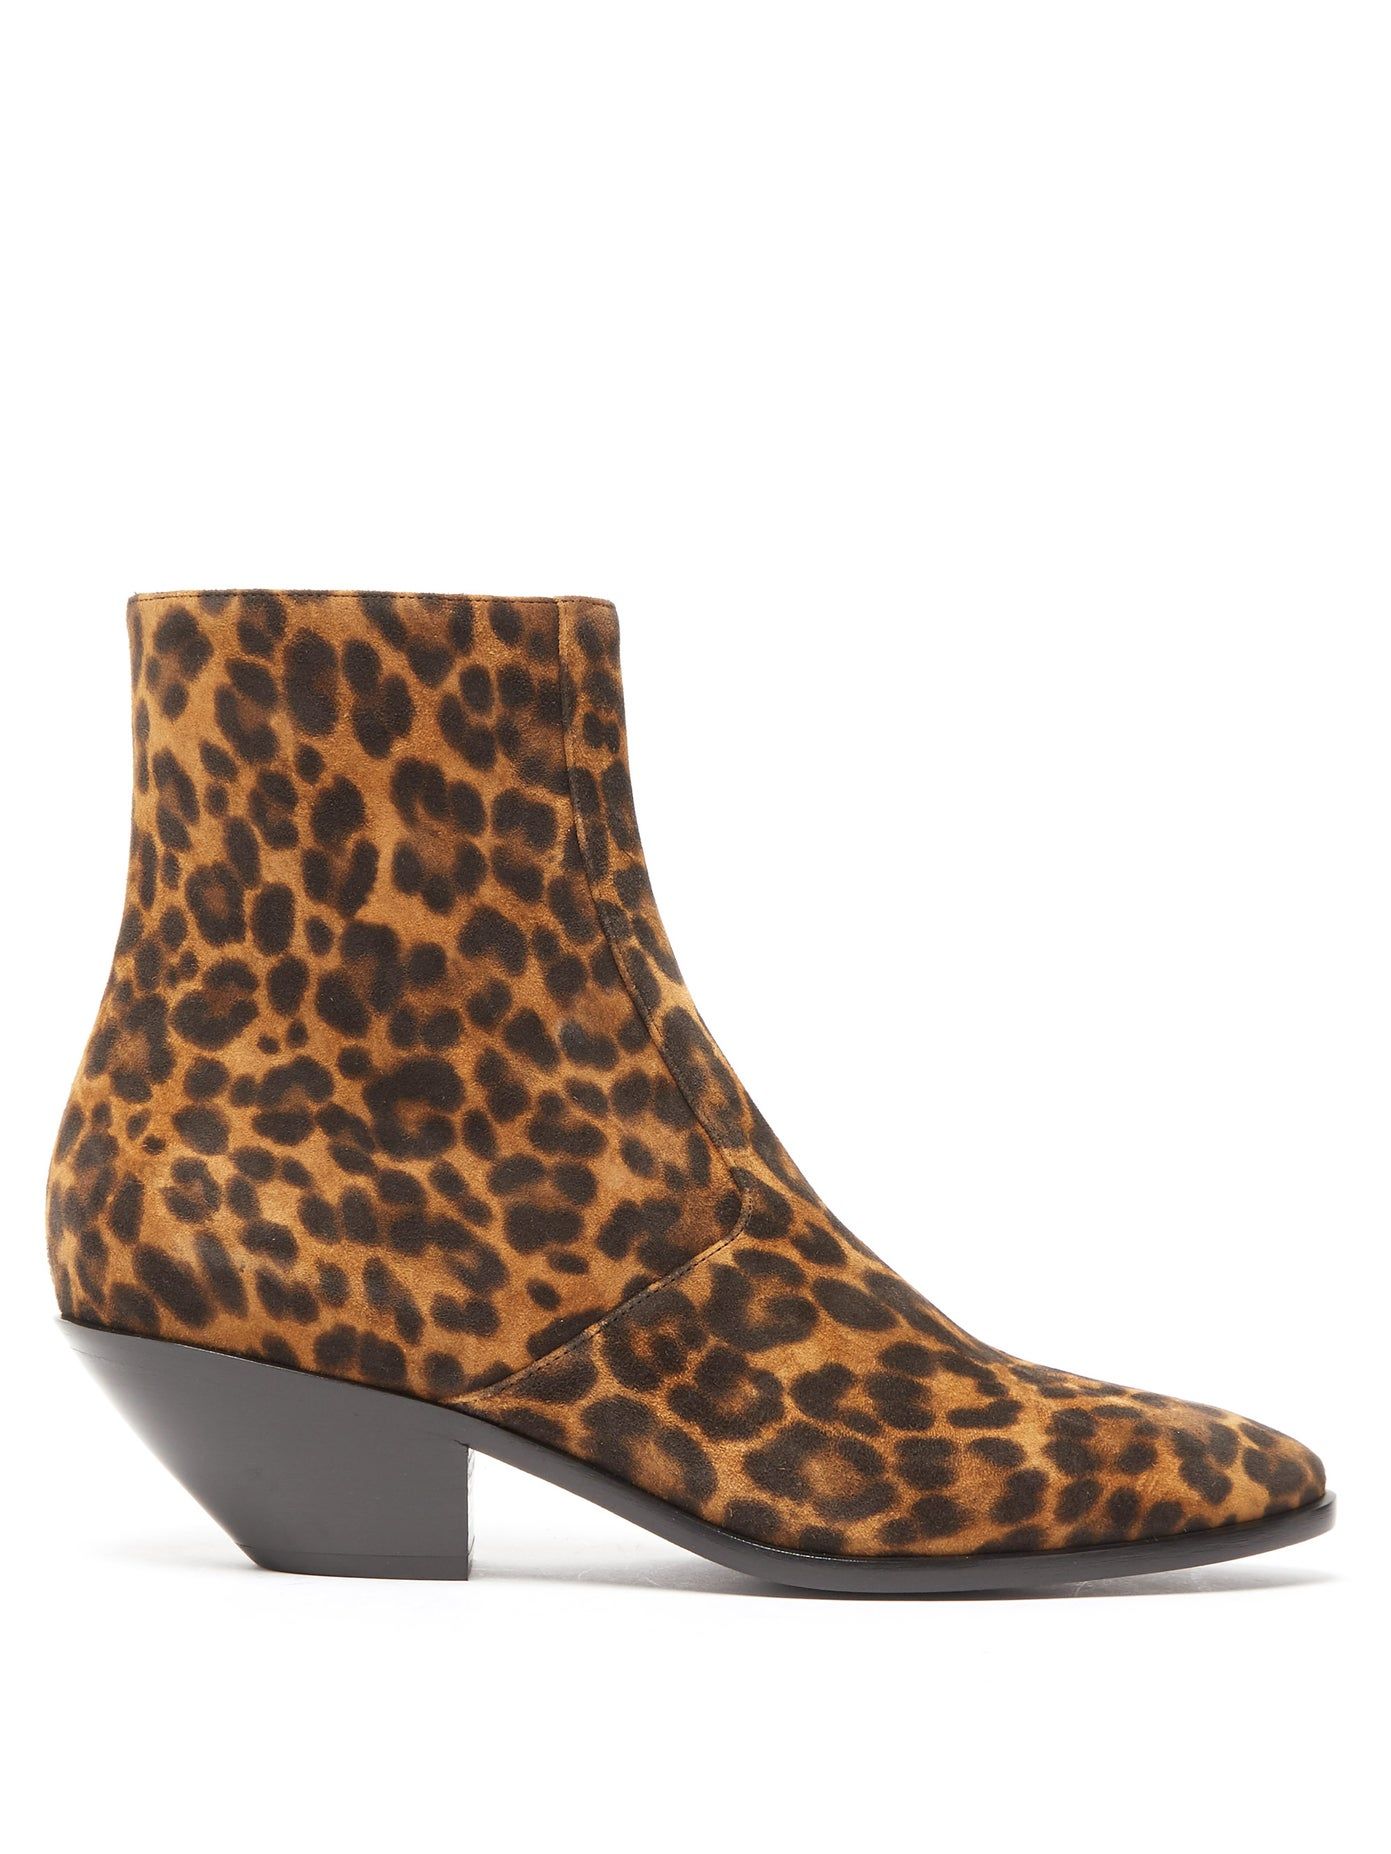 next leopard boots